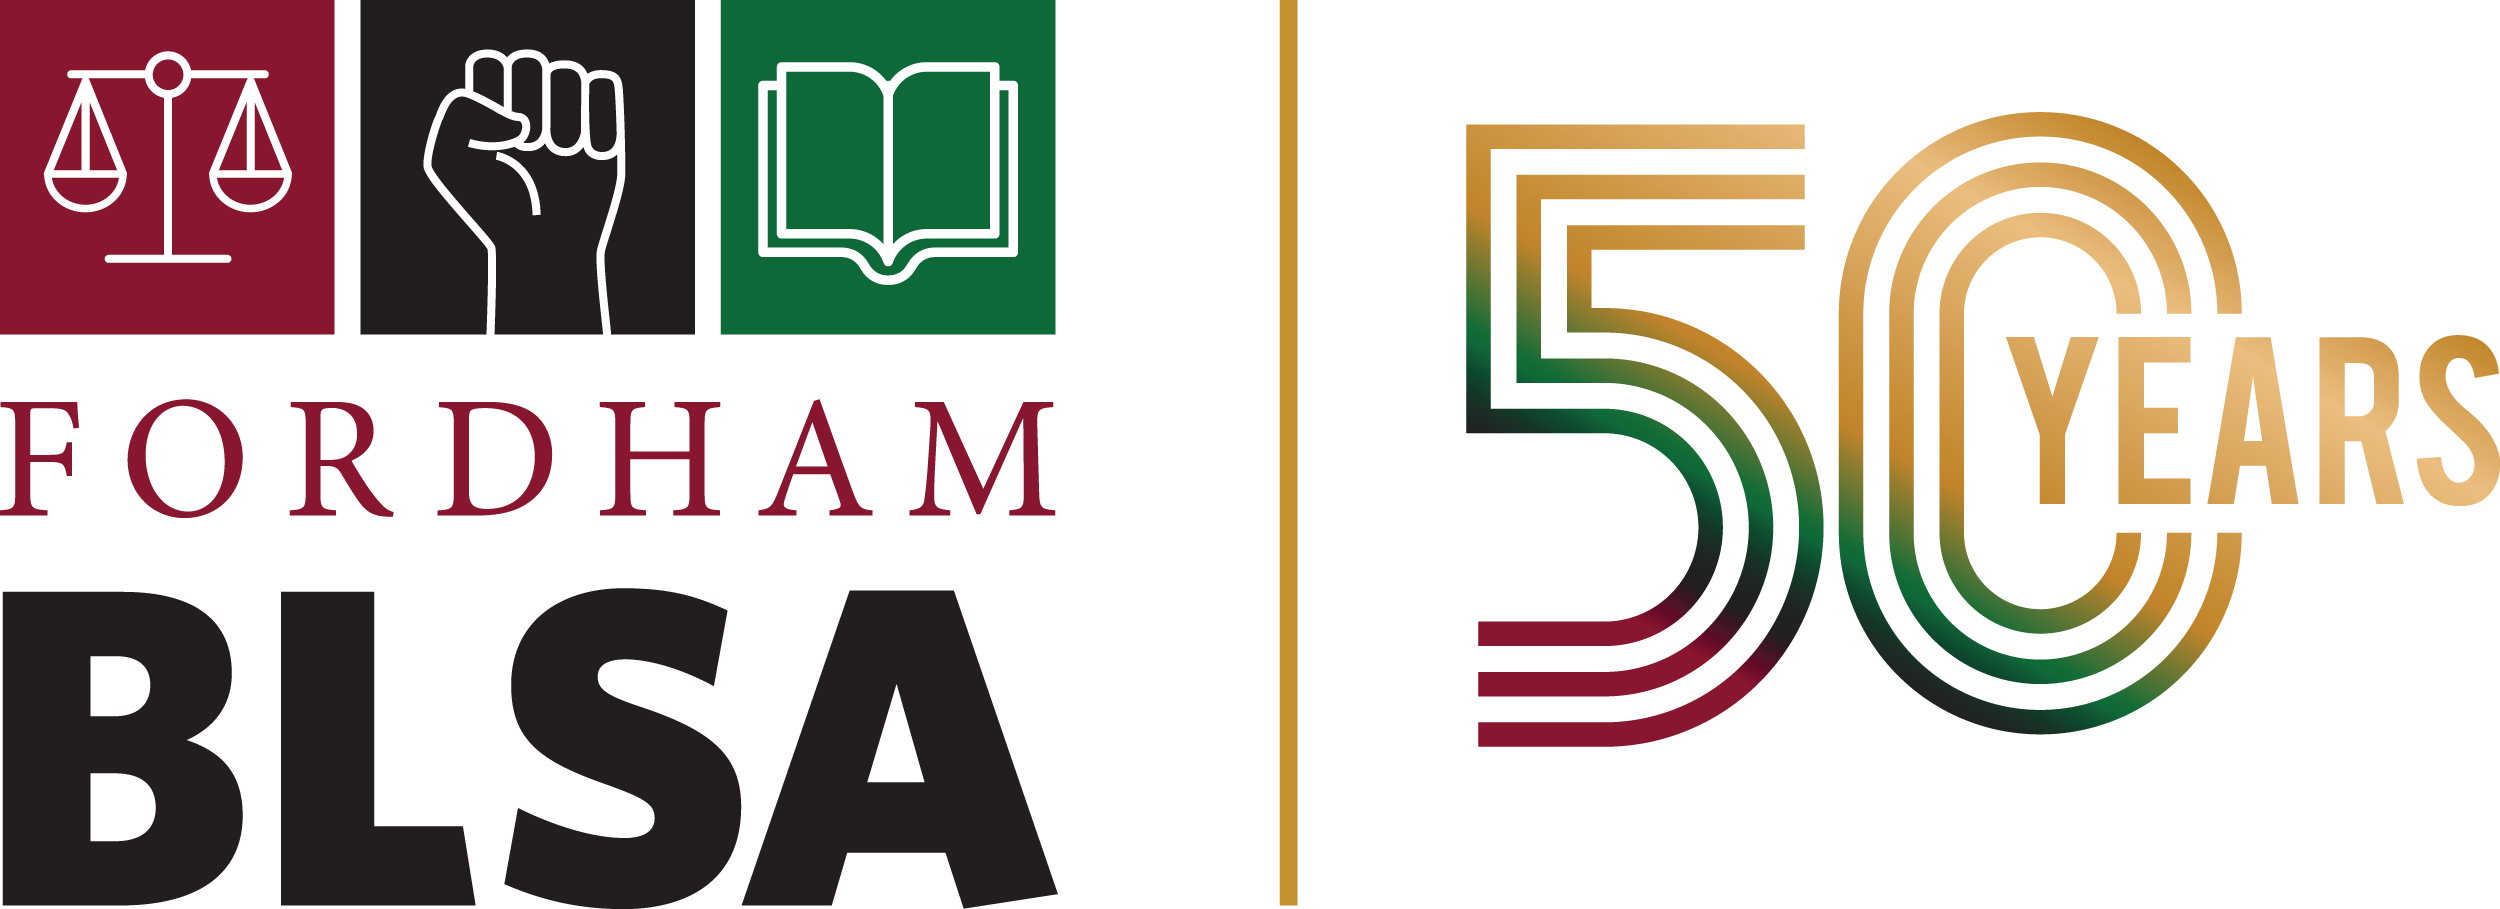 Fordham BLSA 50 Years logo